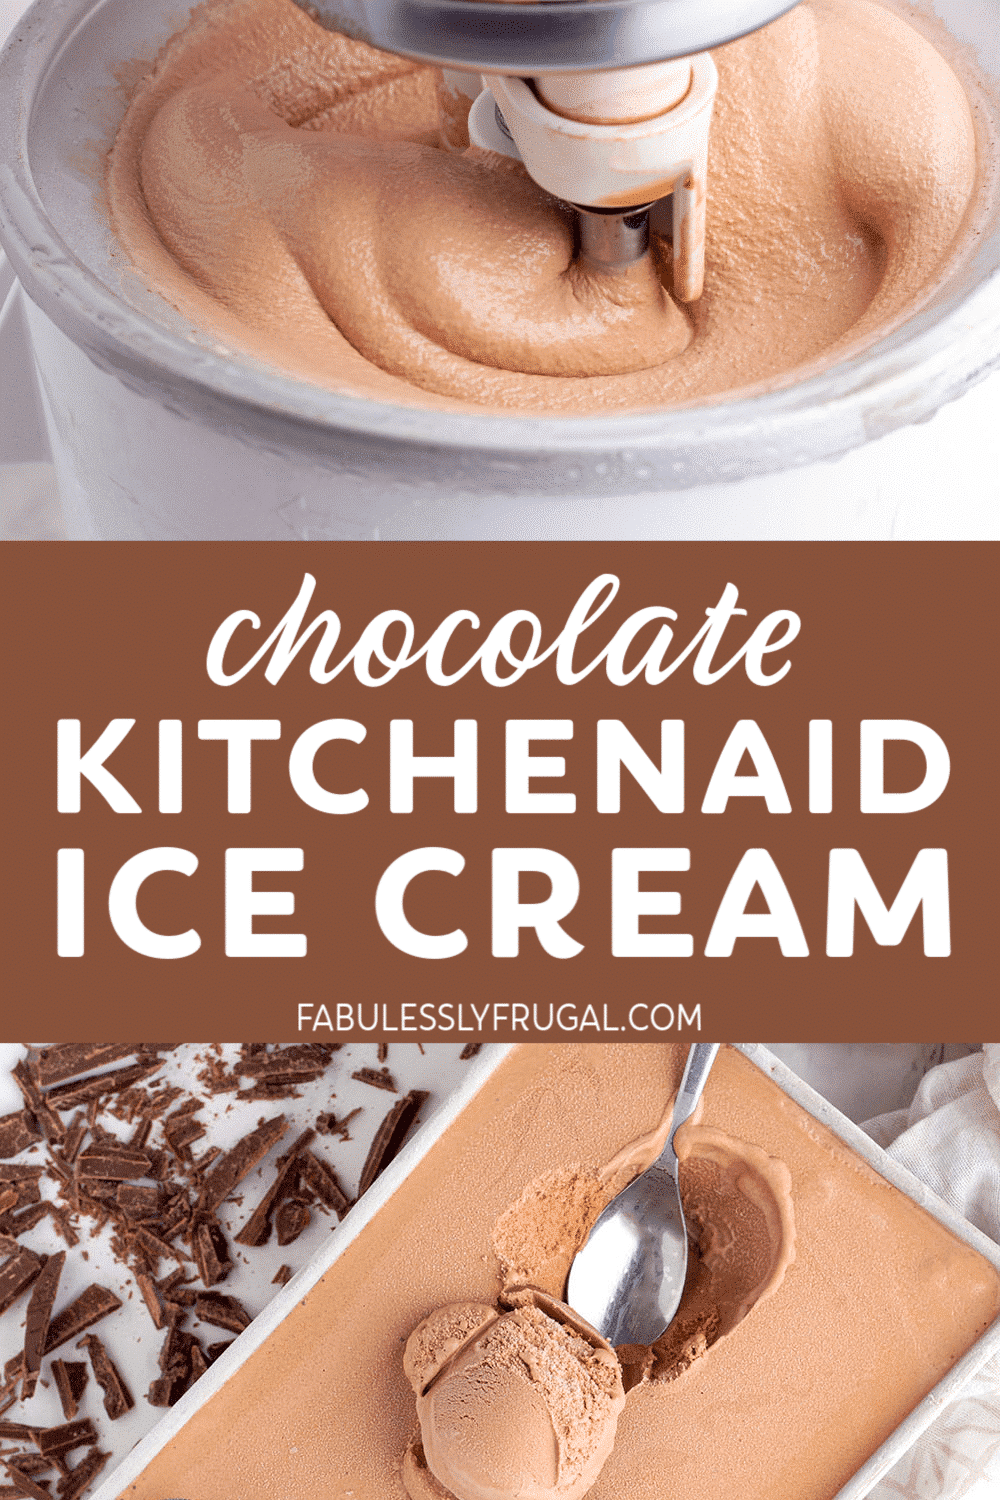 Chocolate kitchenaid ice cream